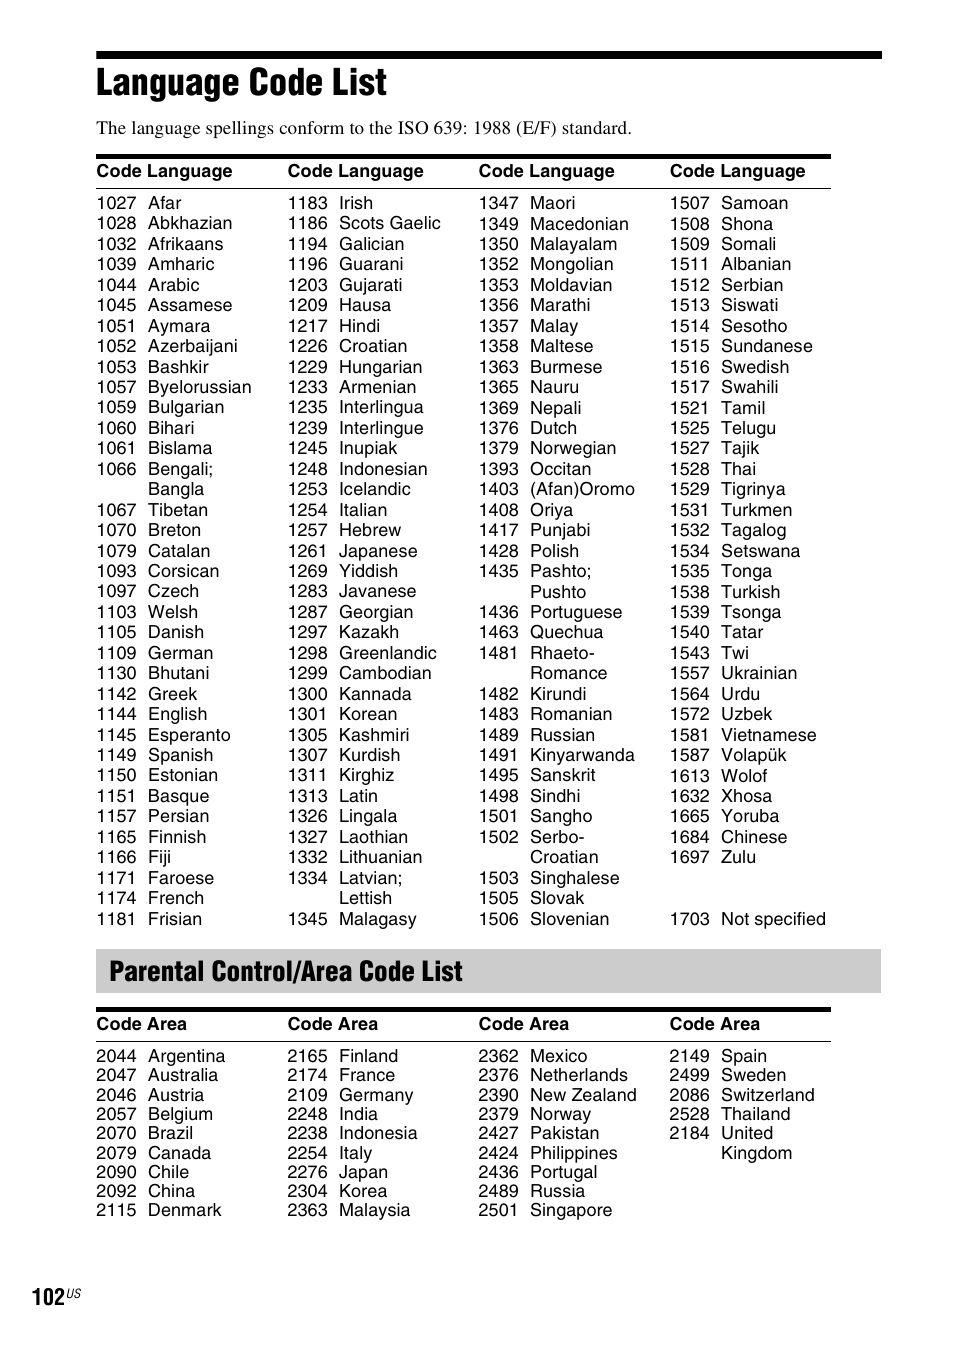 Language code list, Parental control/area code list | Sony BDV-T10 User Manual | Page 102 / 119